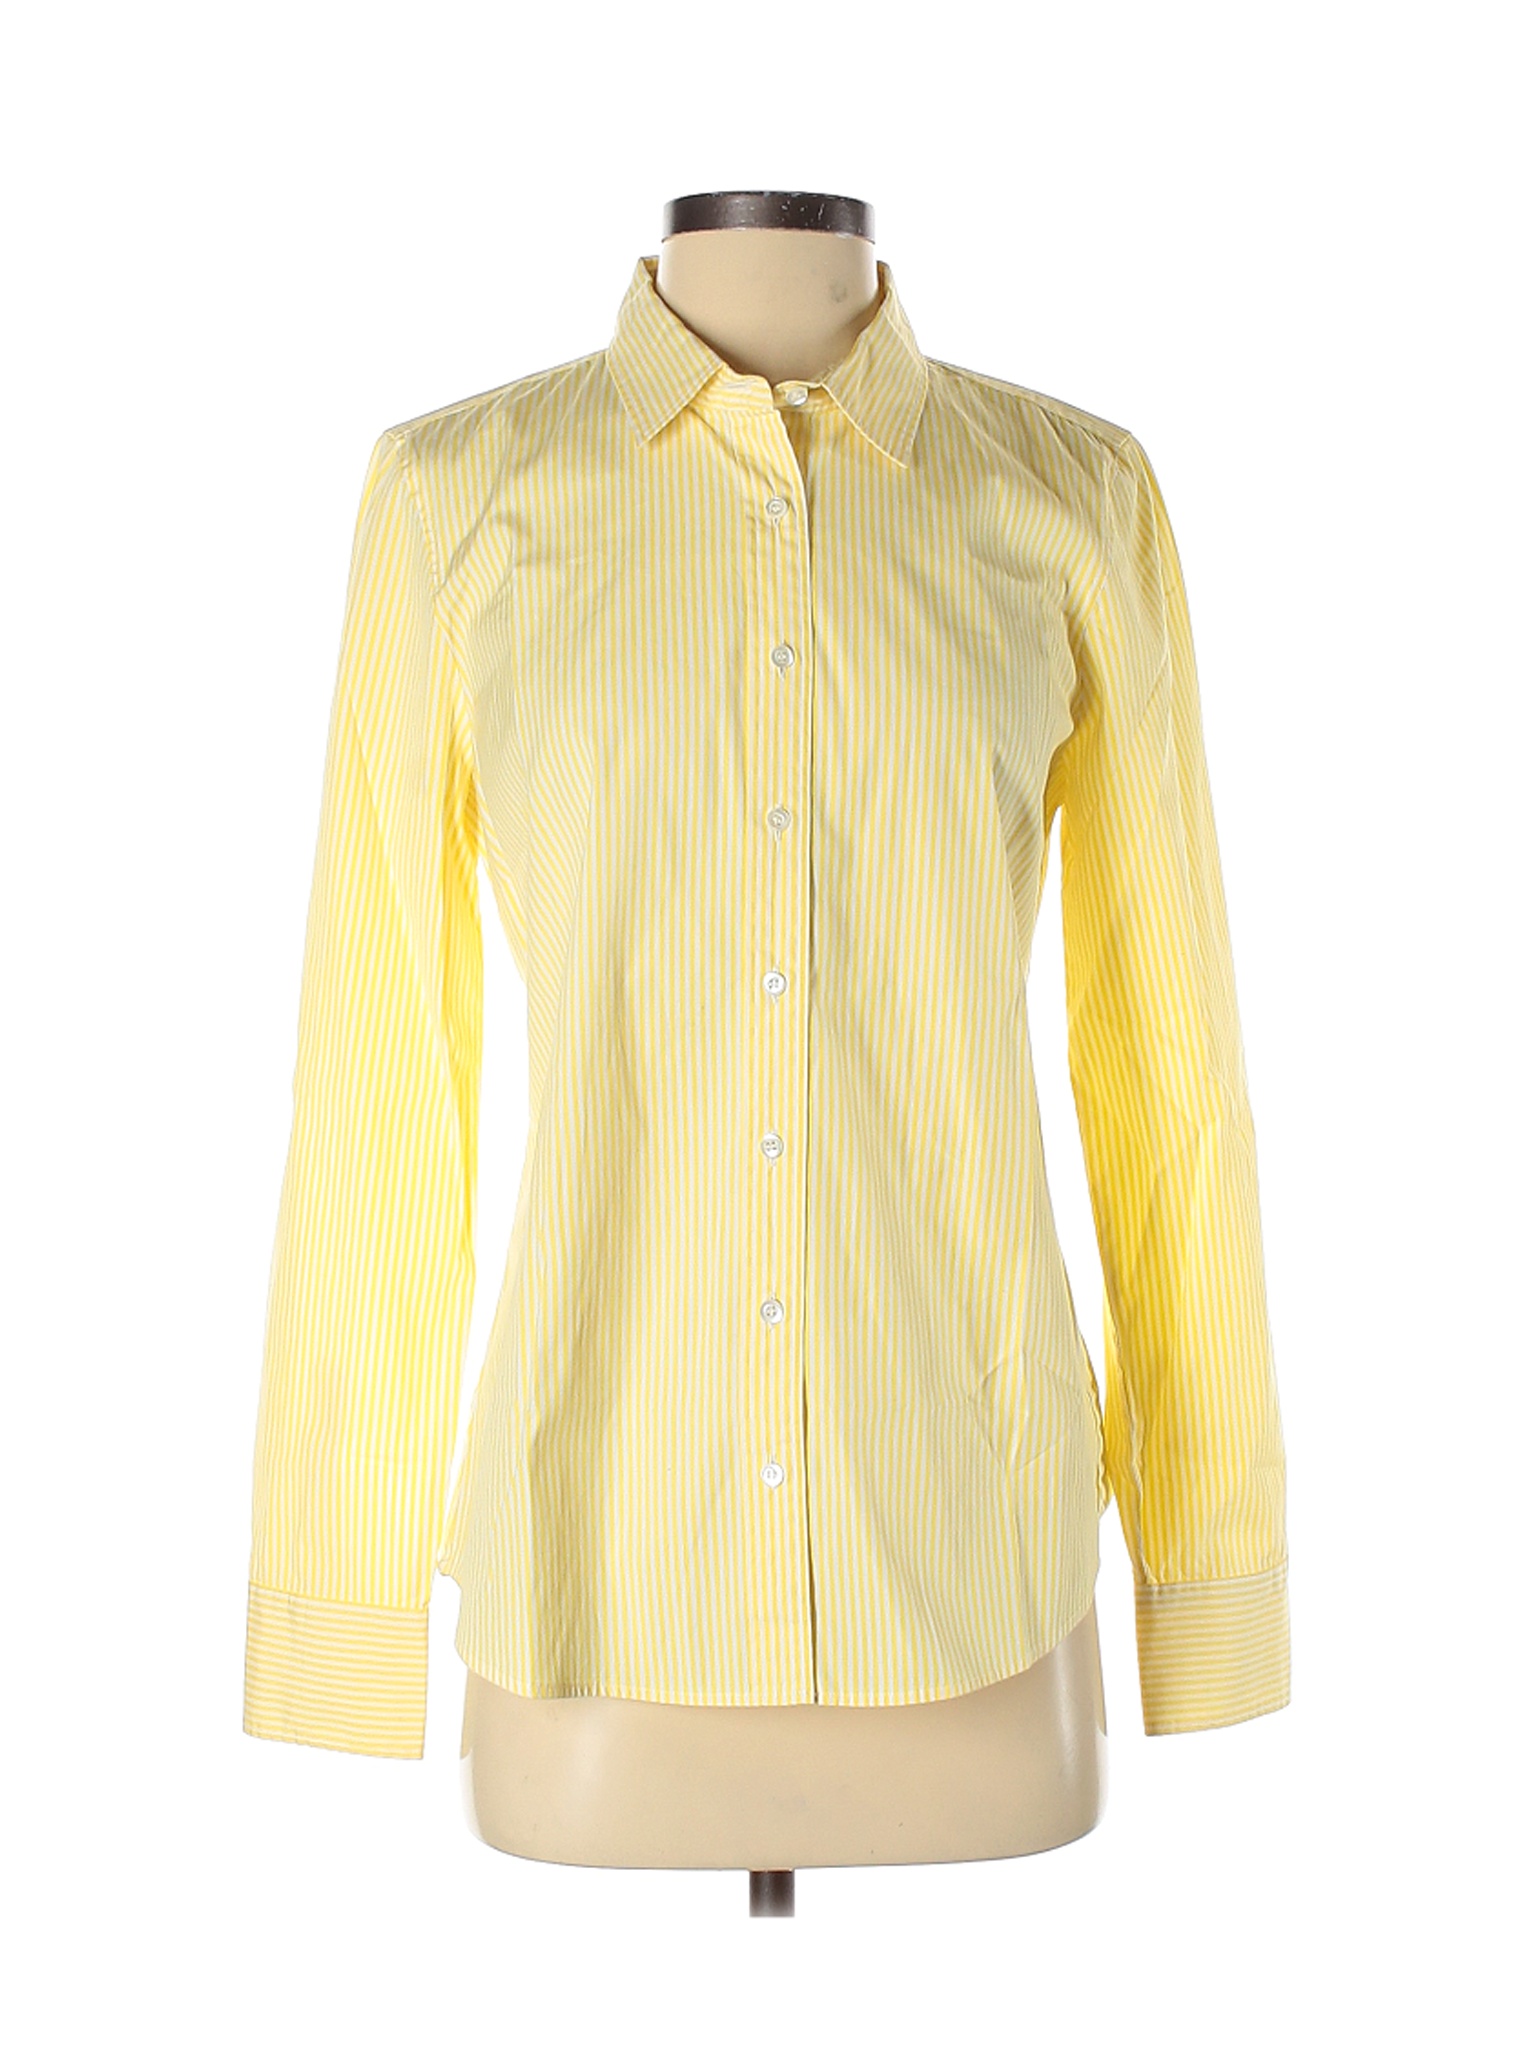 Haberdashery for J.Crew Women Yellow Long Sleeve Button-Down Shirt S | eBay